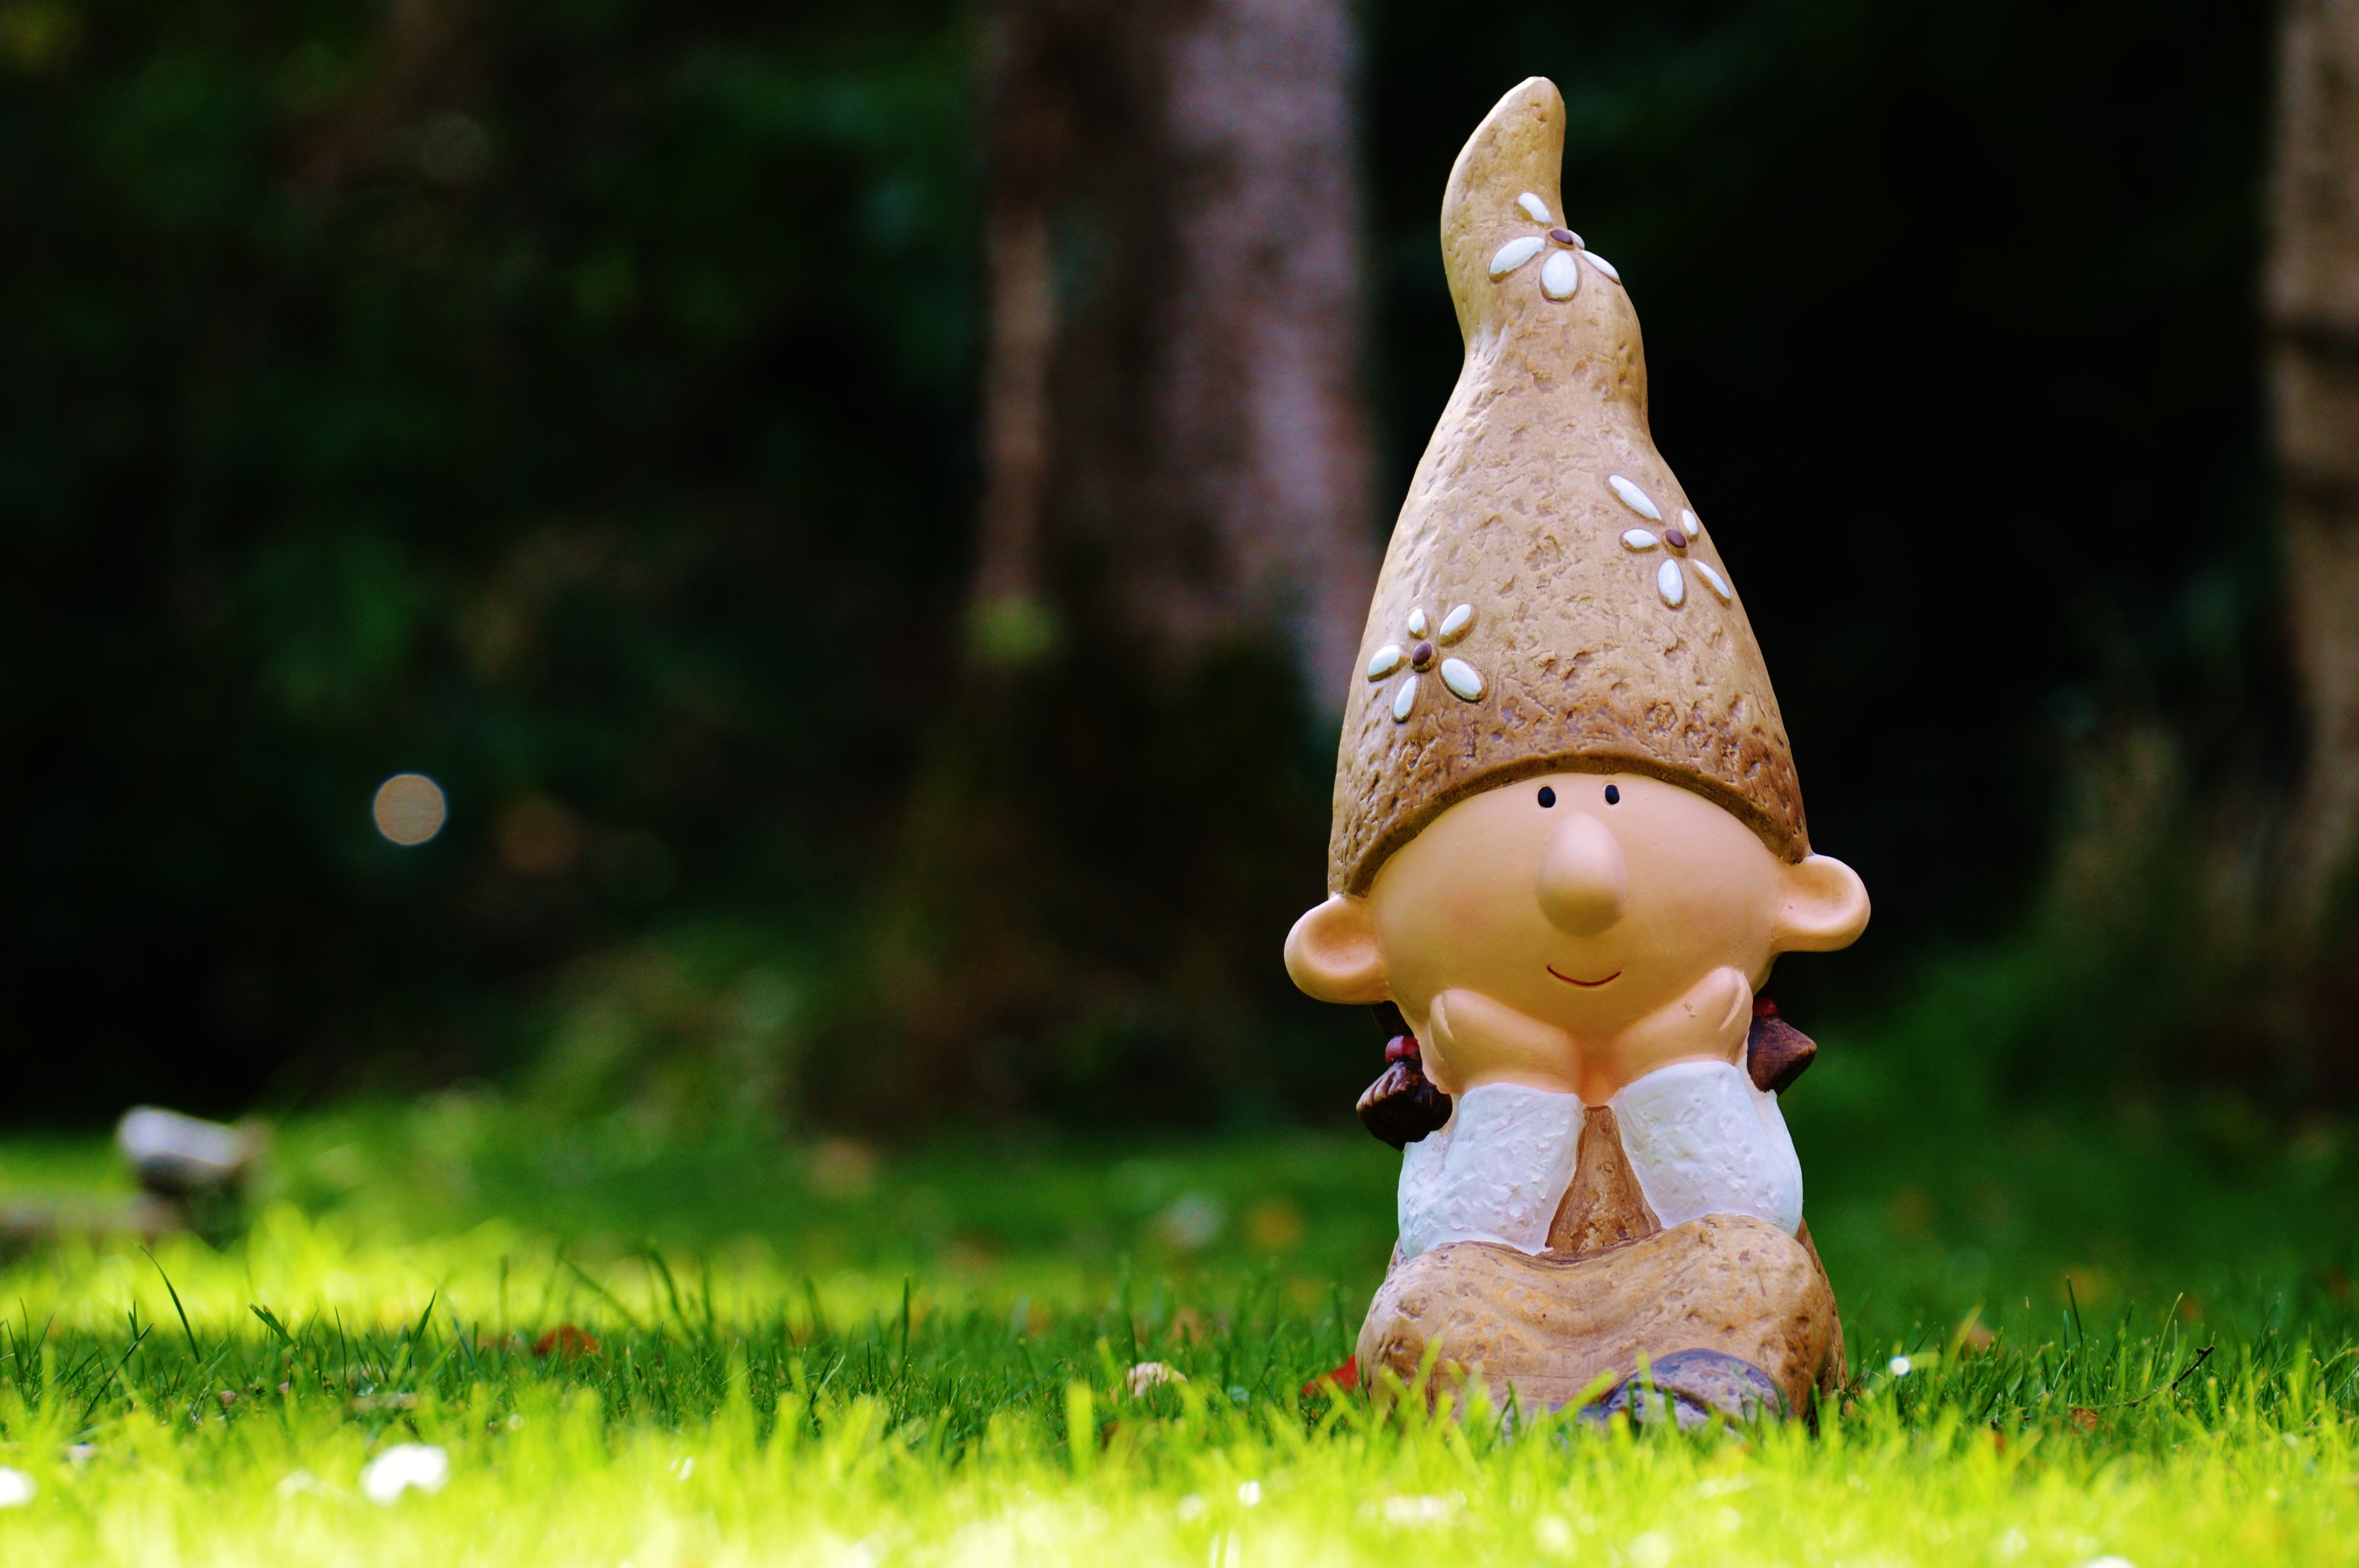 gnome figurine on grassy outdoor